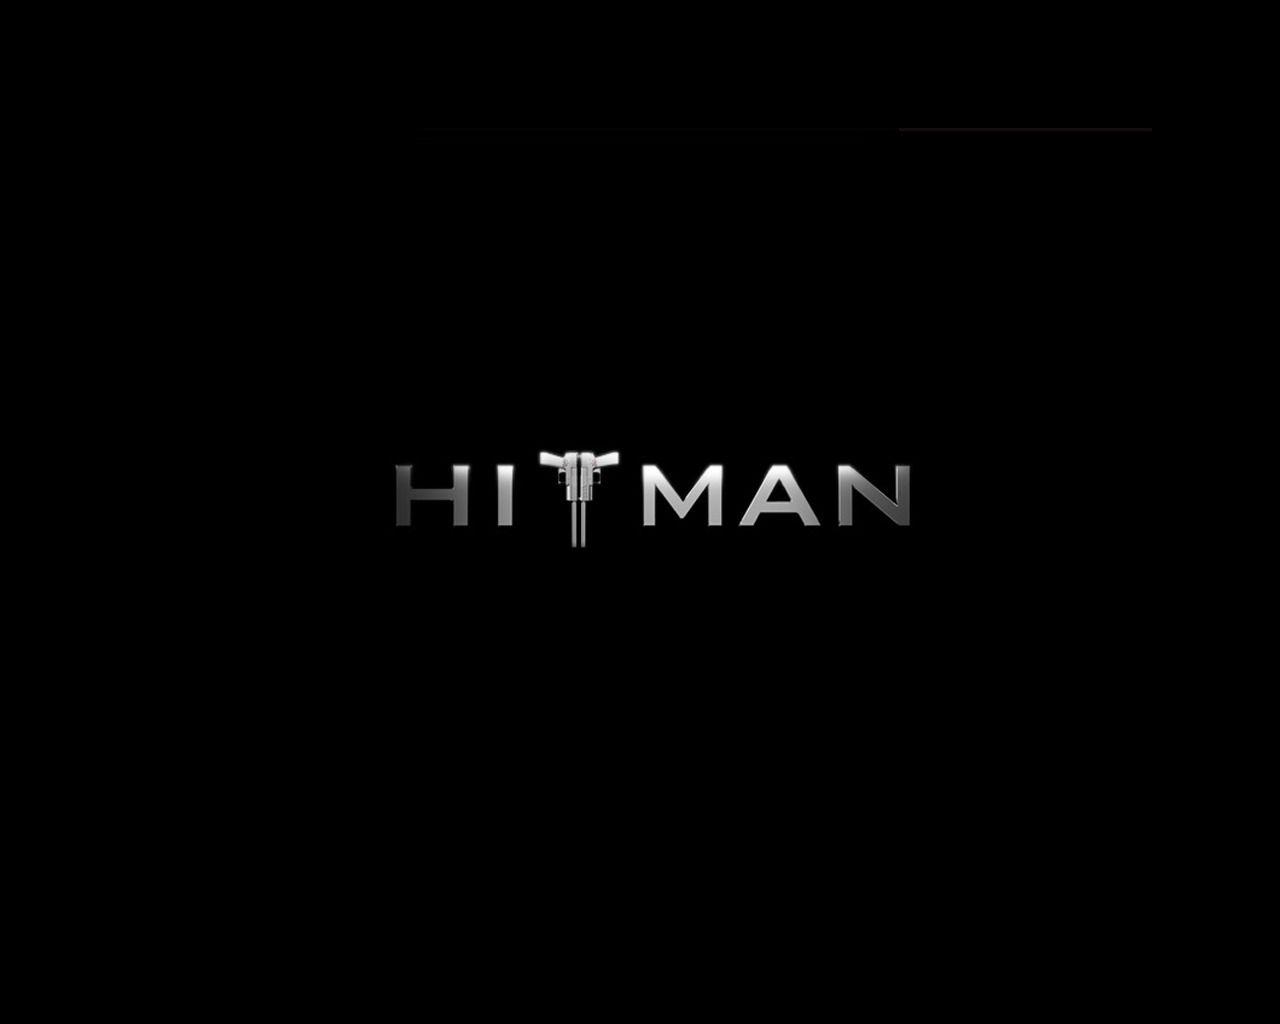 Hitman Logo Png wallpaper Download Hitman Logo wallpaper to your